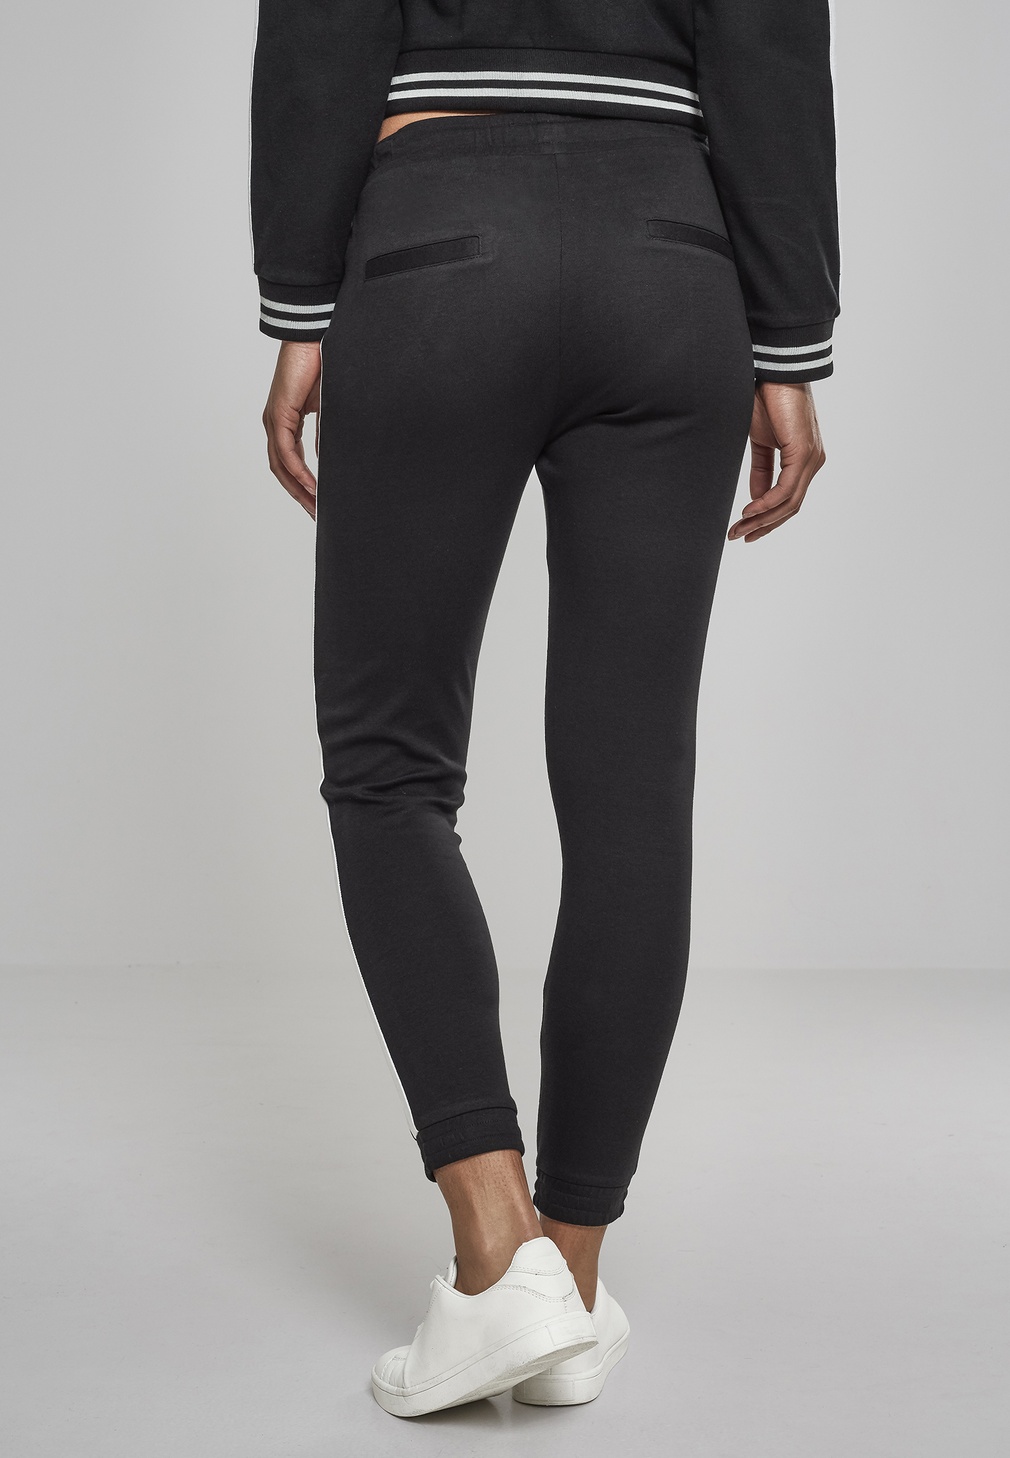 Urban Classics Damen | Damen | Hosen | Ladies Interlock Black/White Lifestyle Jogpants Sweatpants